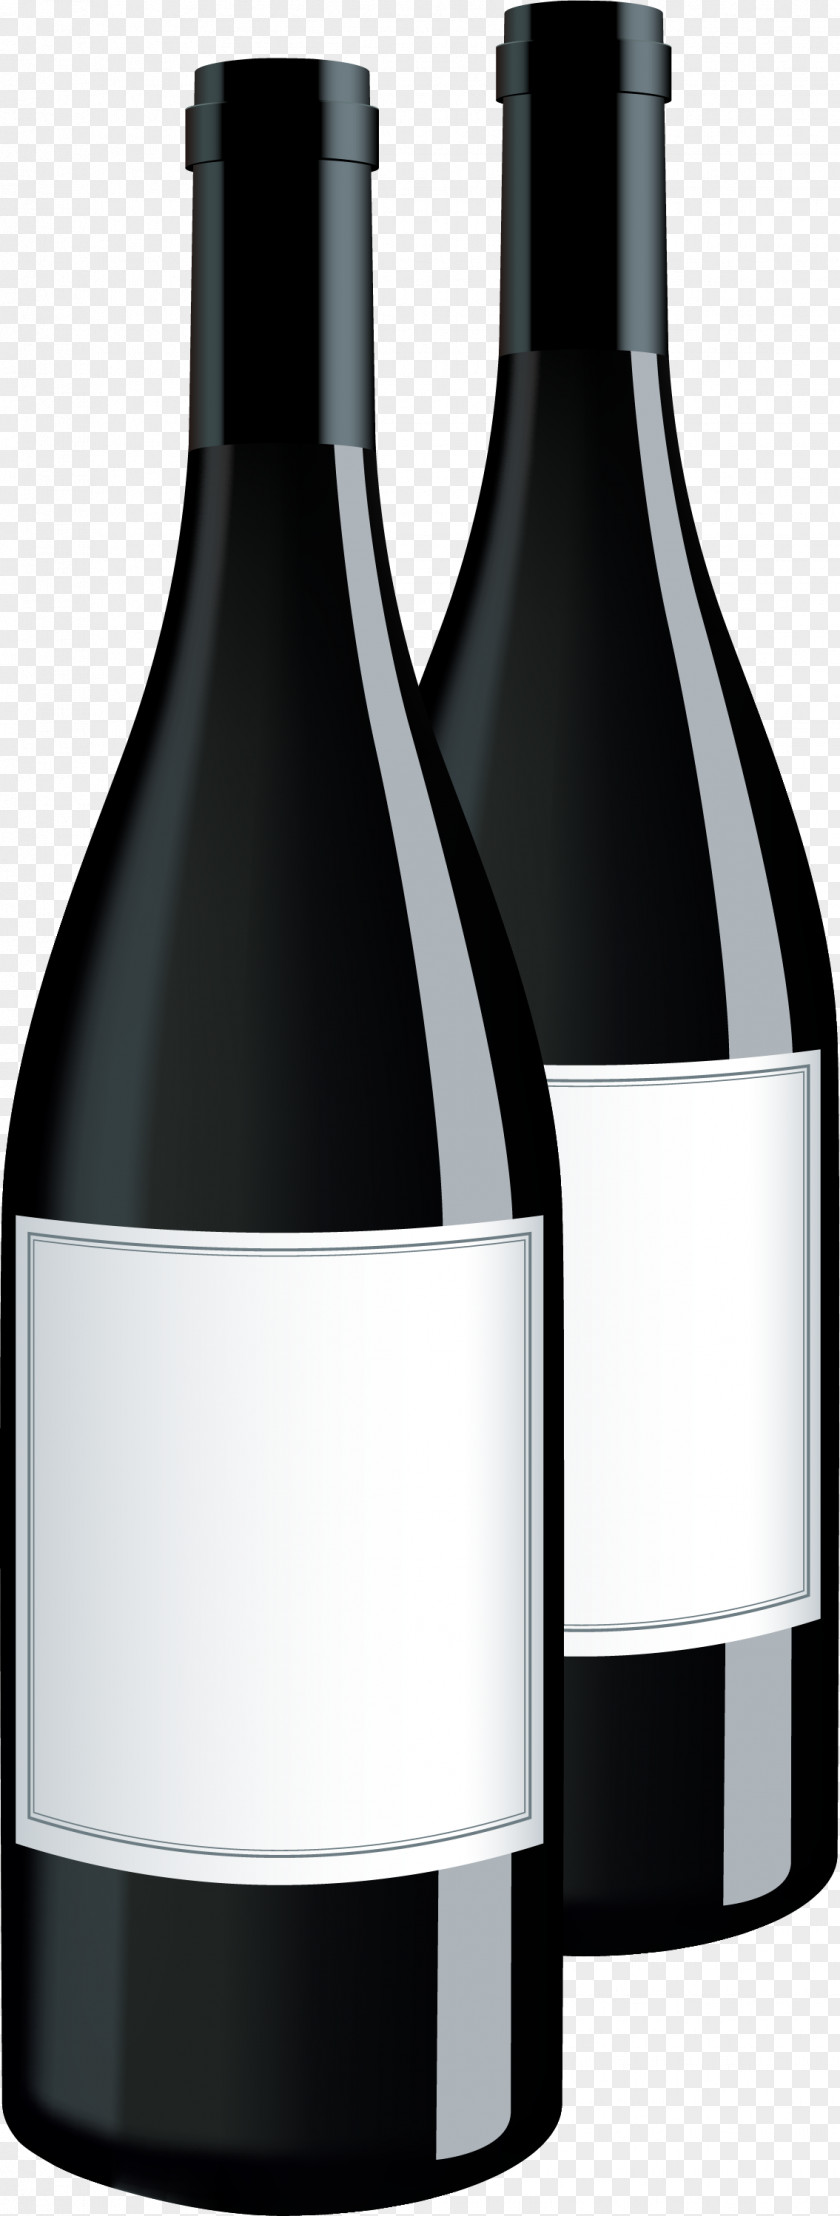 Two Bottles Of Wine Red Rosxe9 Terratico Di Bibbona Bottle PNG